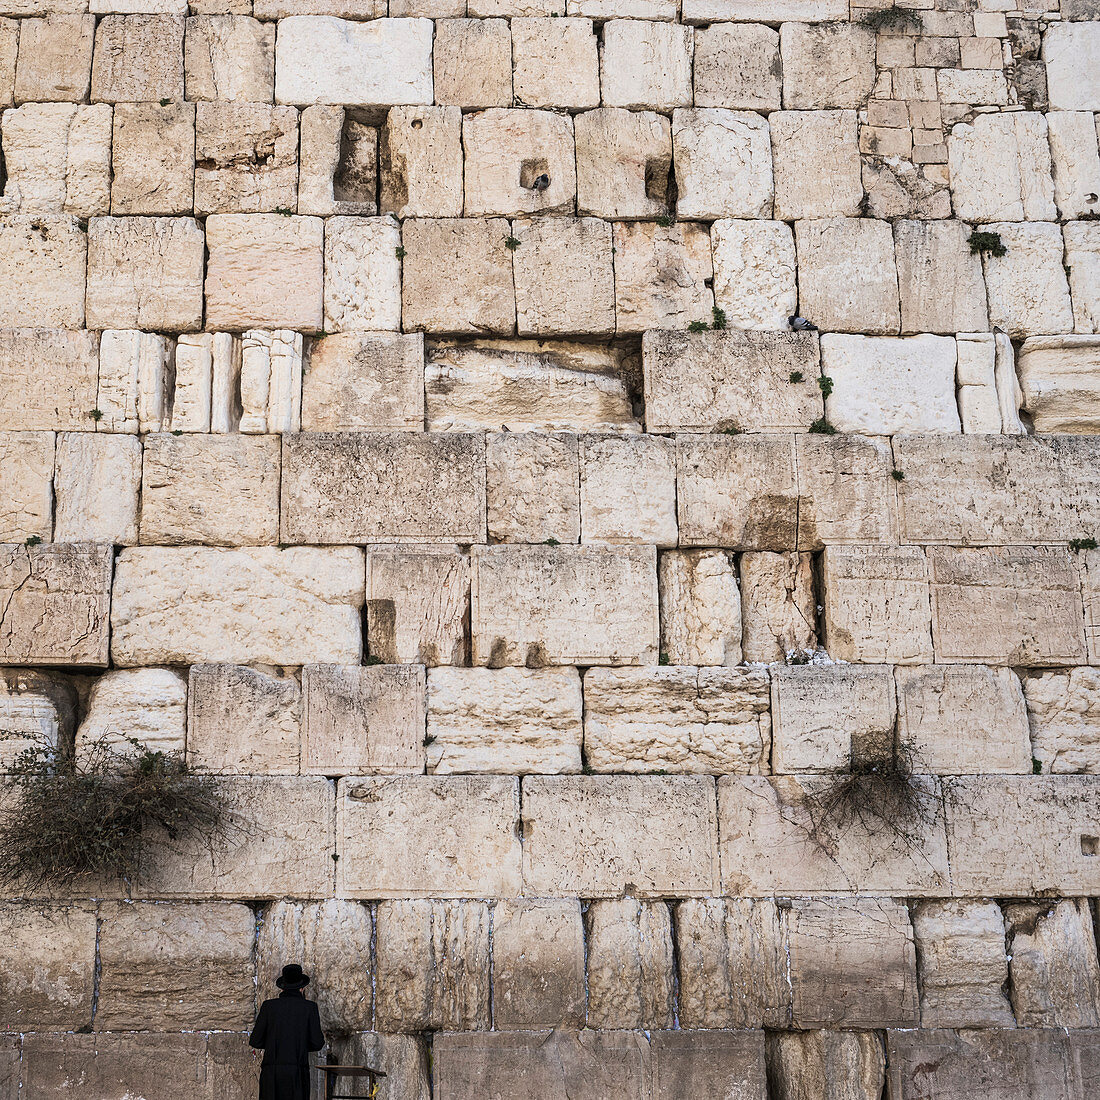 'A lone Jewish man stands at the Wailing Wall, Old City of Jerusalem; Jerusalem, Israel'